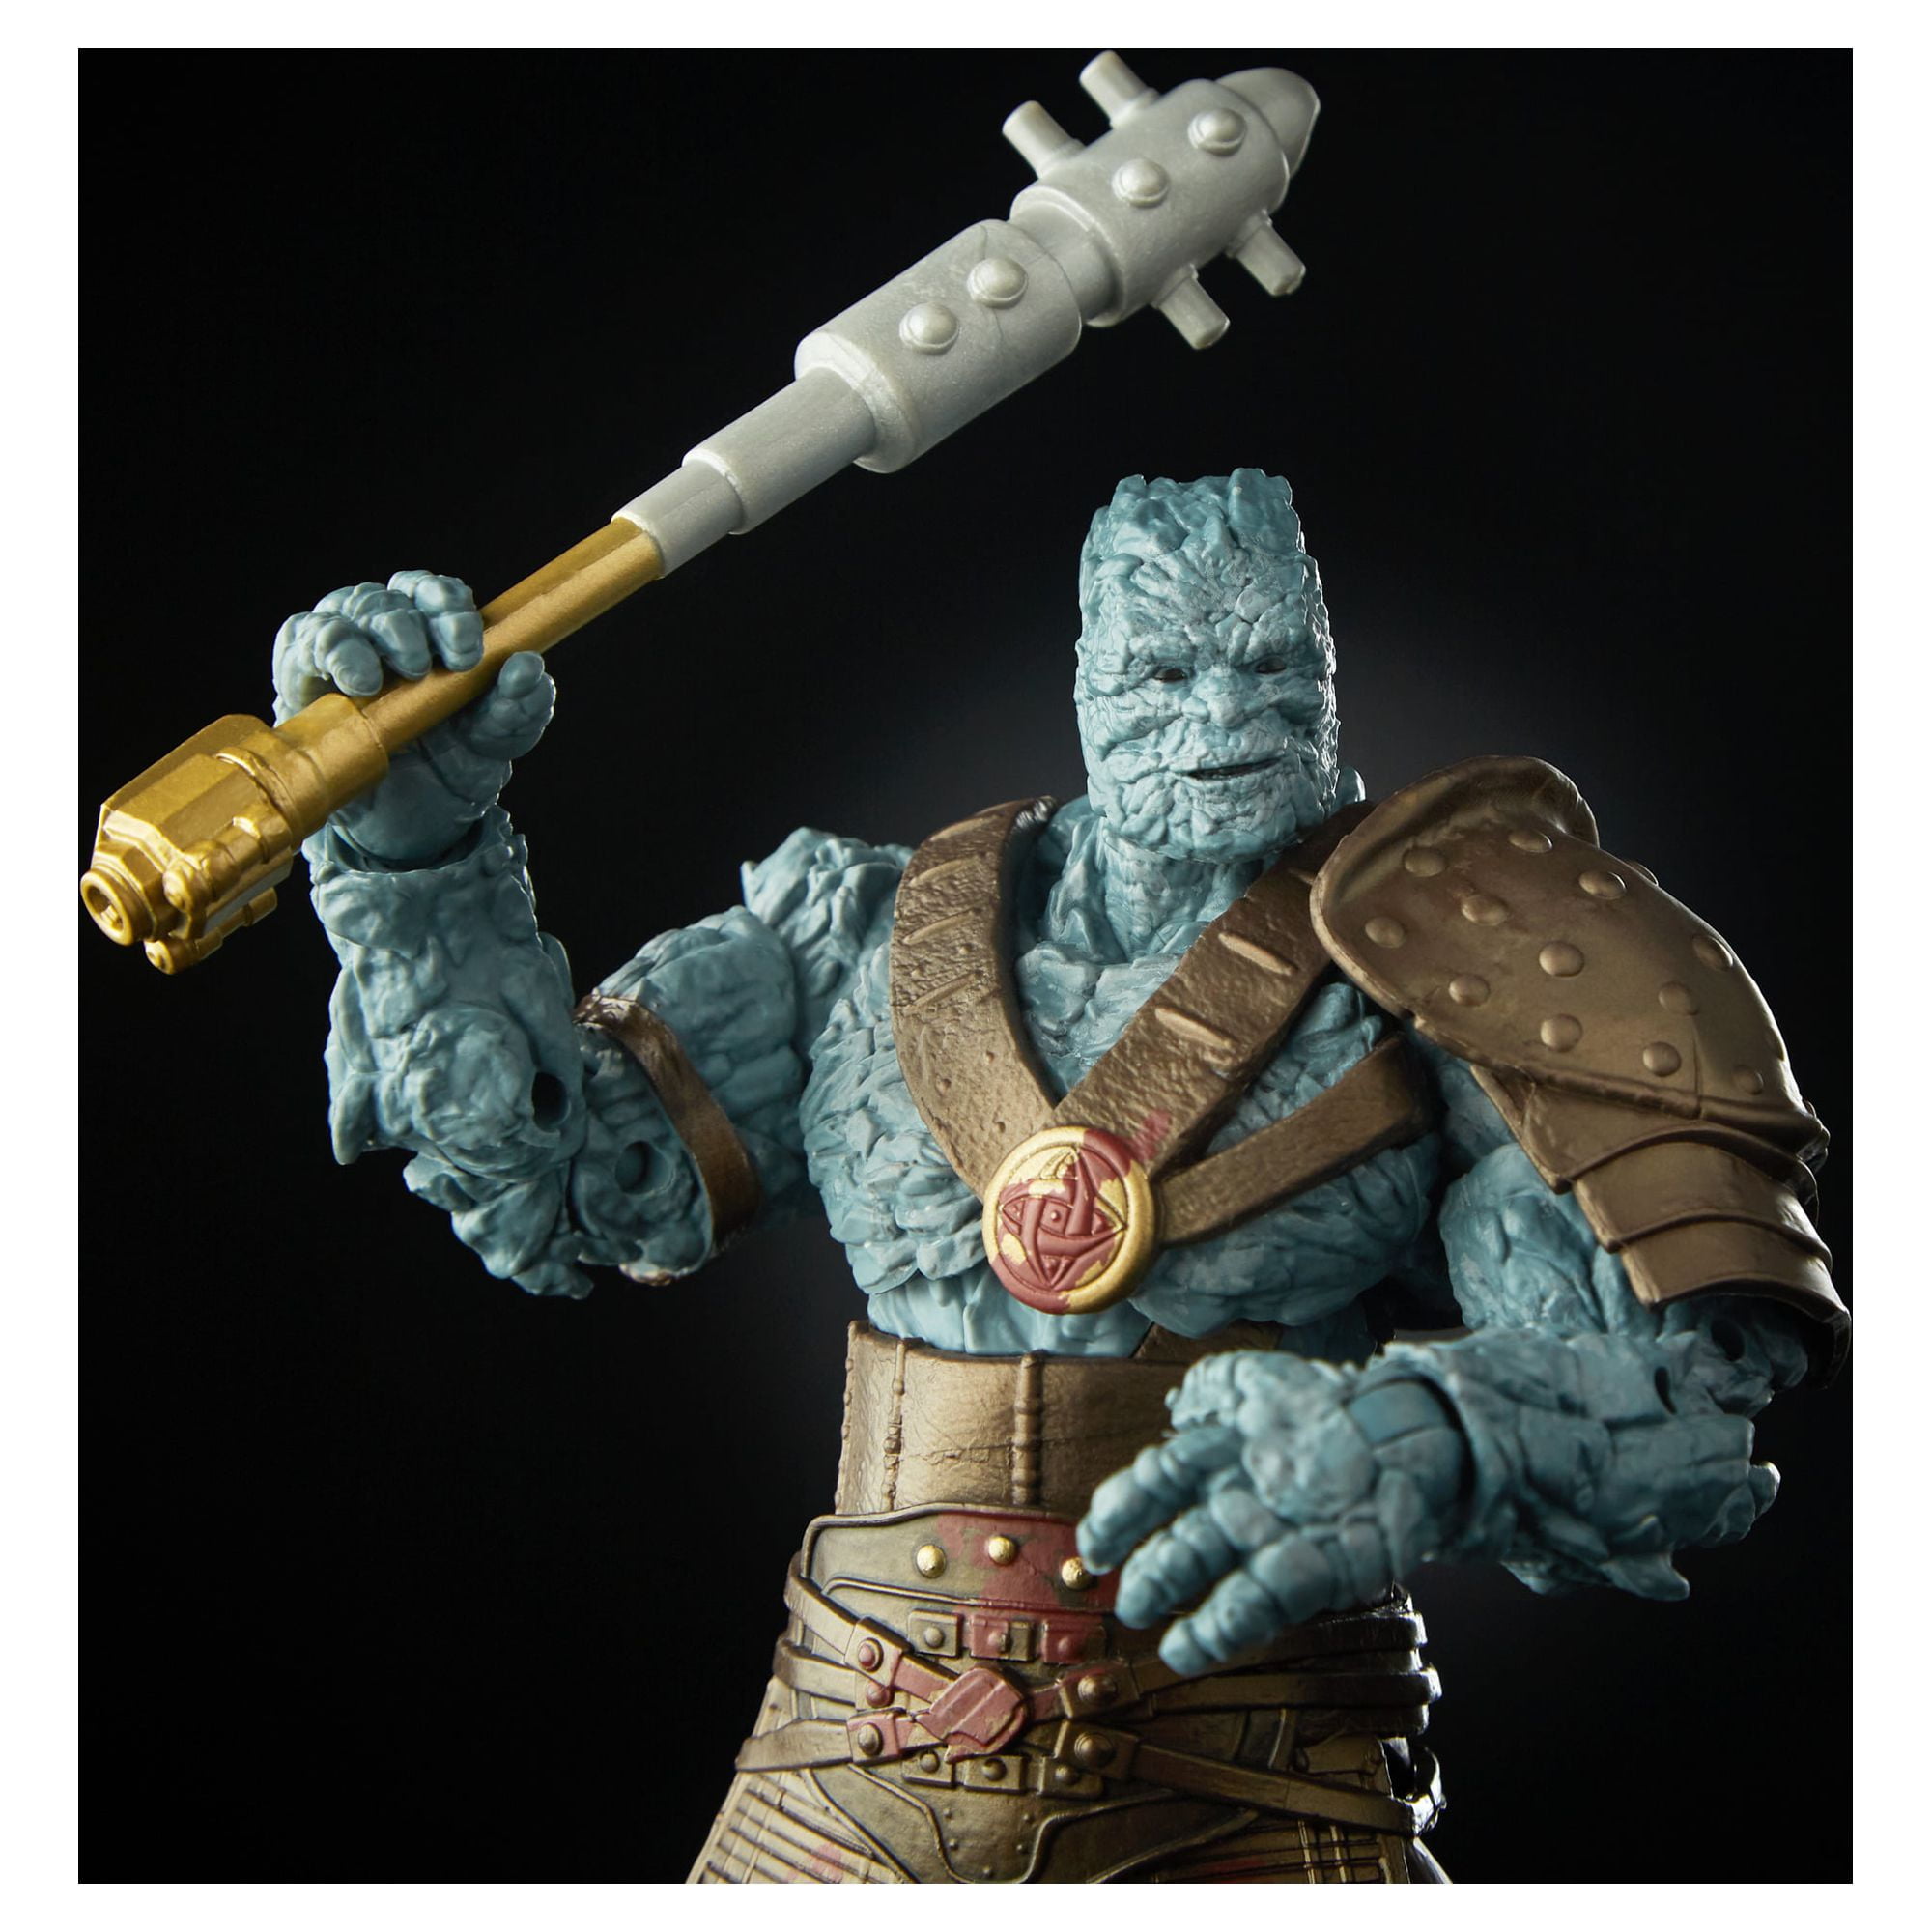 Marvel Legends GRANDMASTER 6 Action Figure with Melt Stick Thor Ragnarok